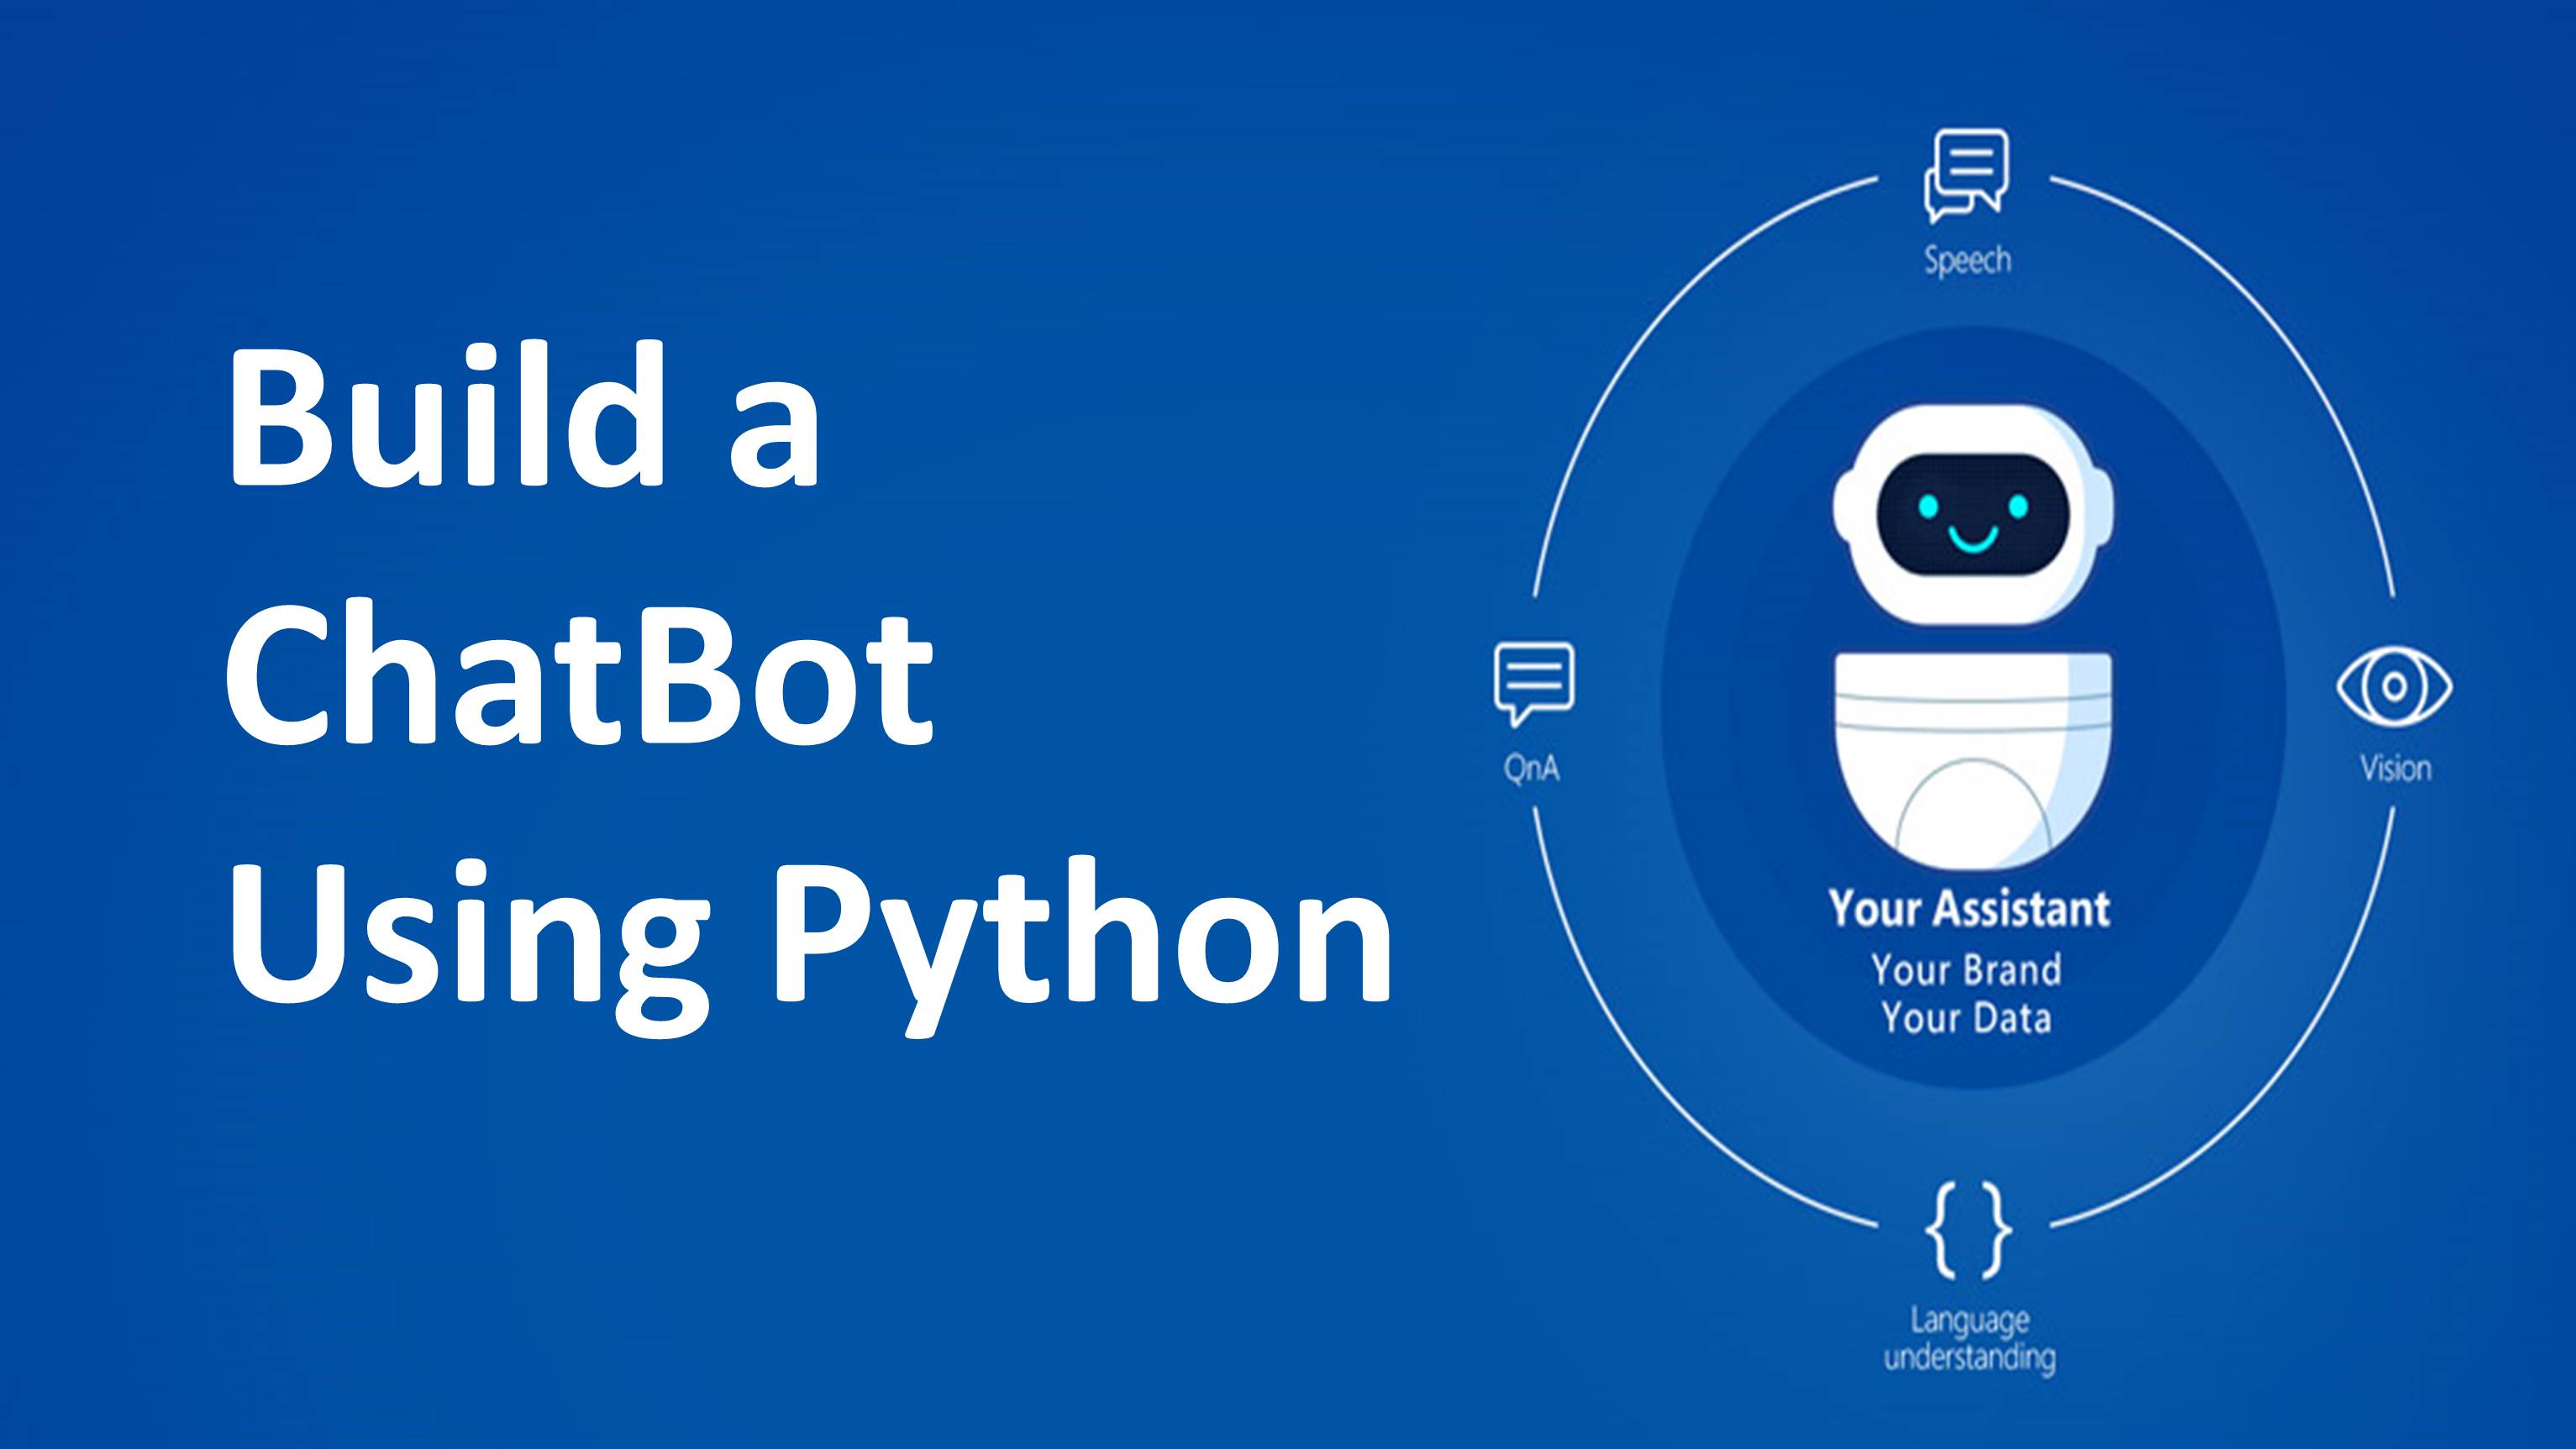 Build a ChatBot Using Python